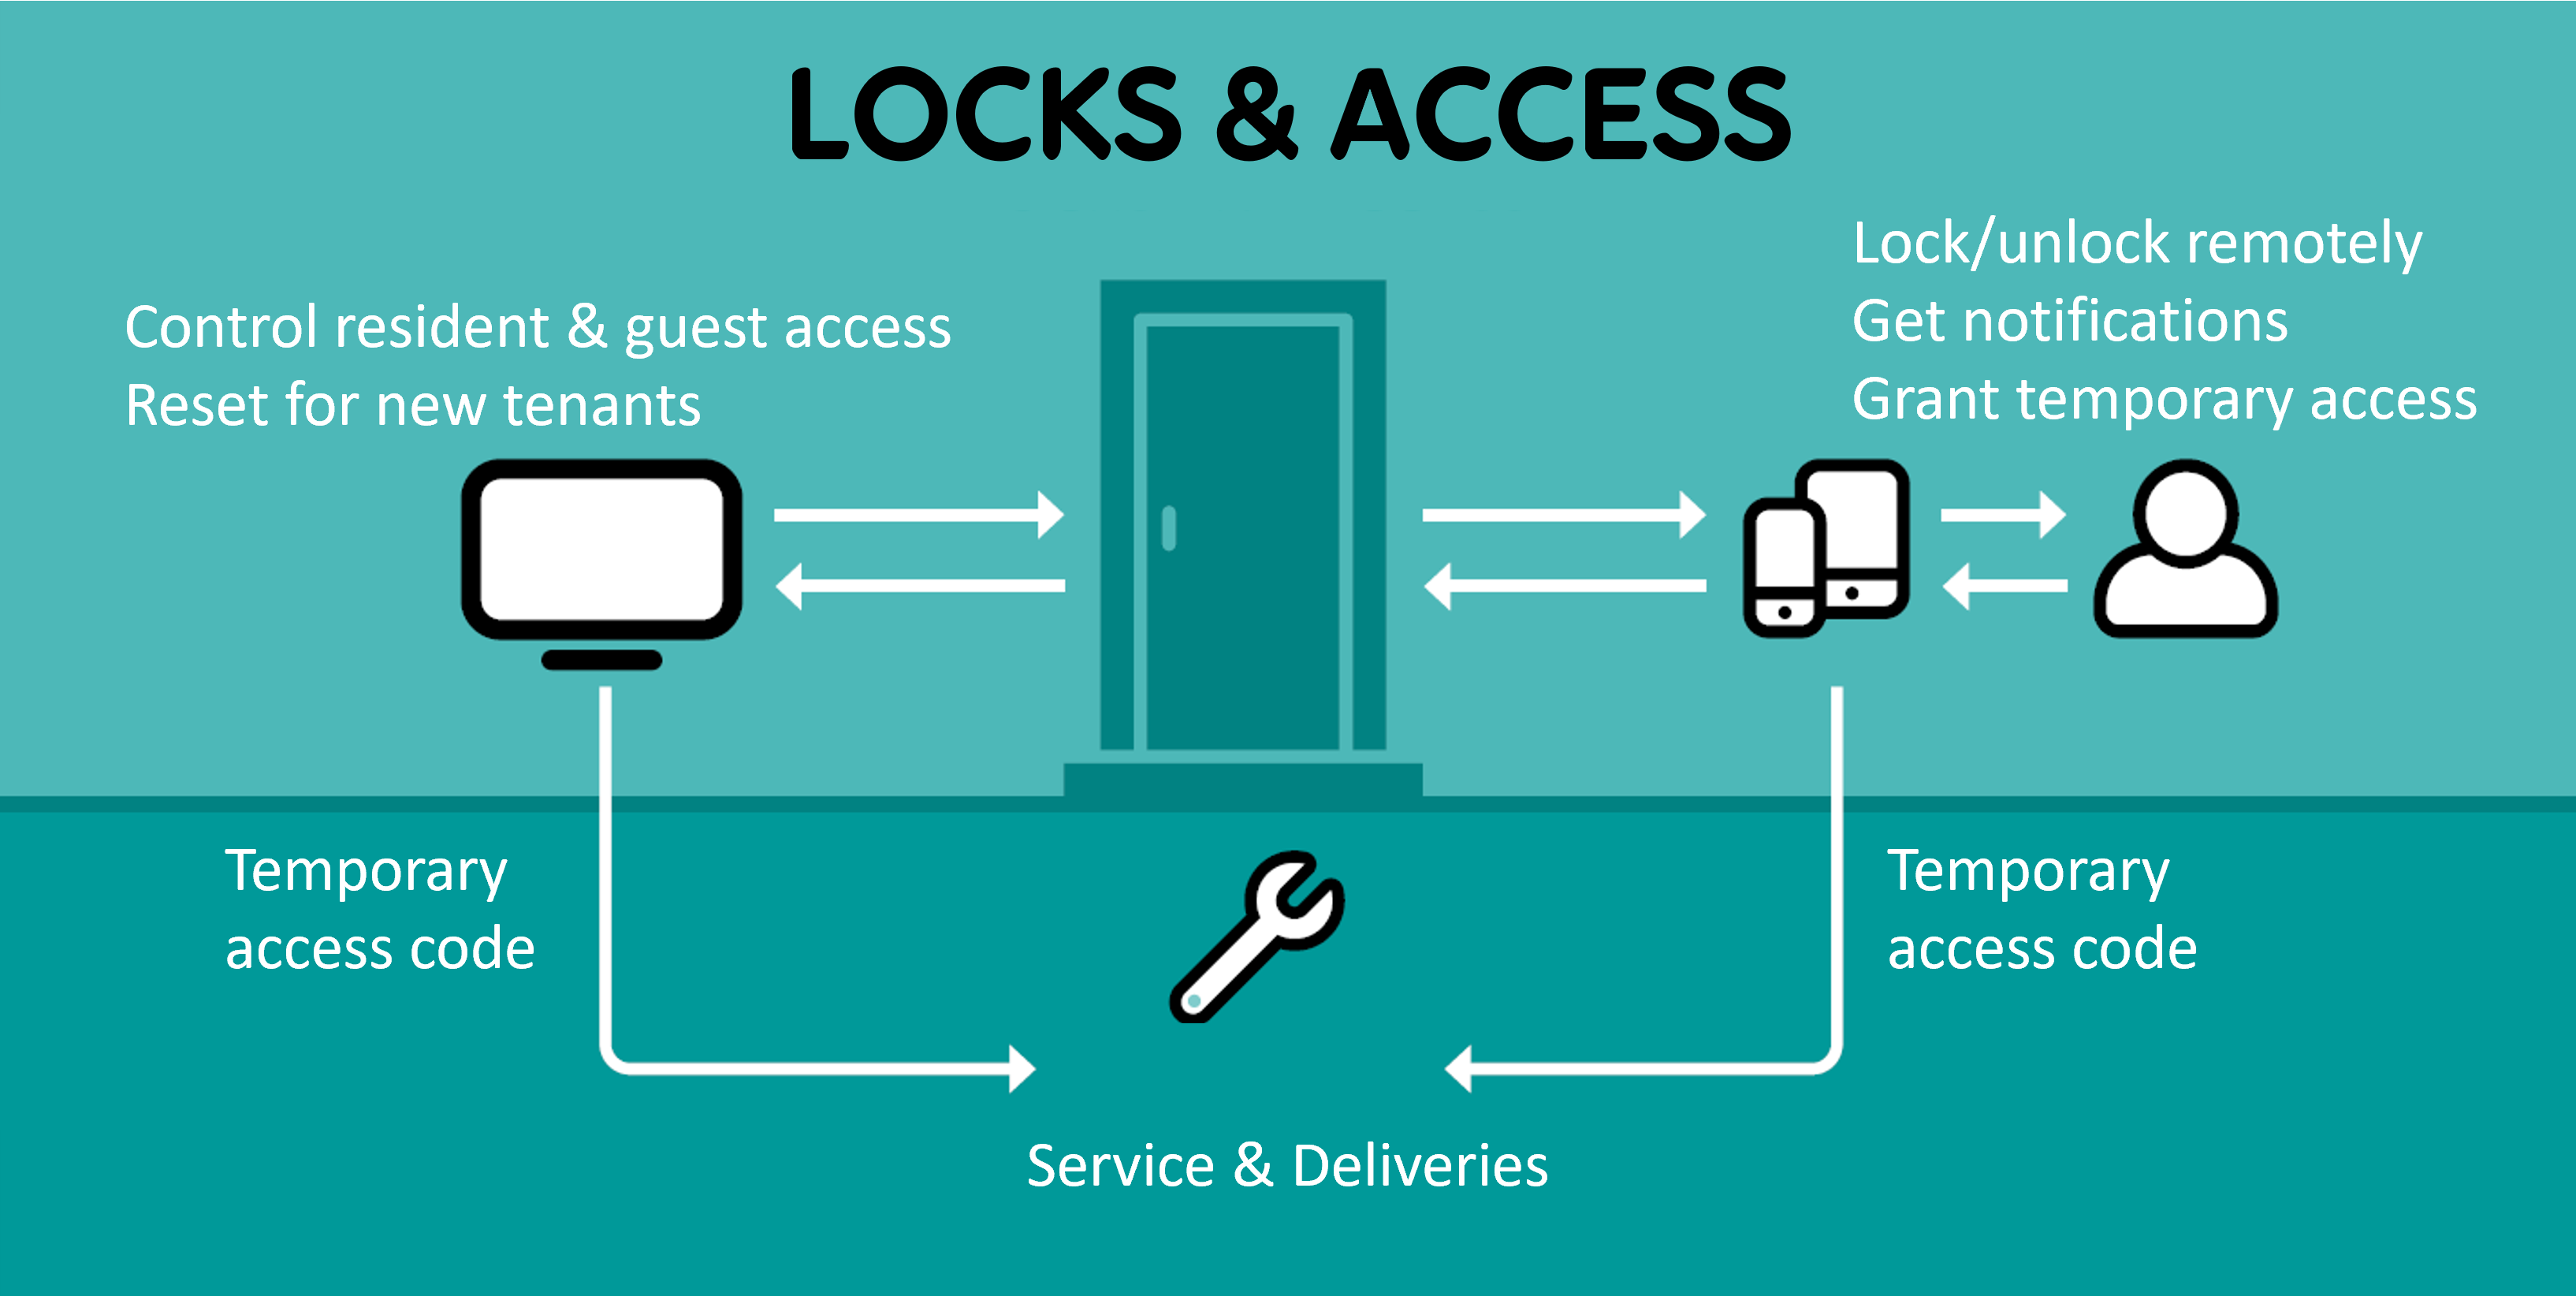 Lock & access